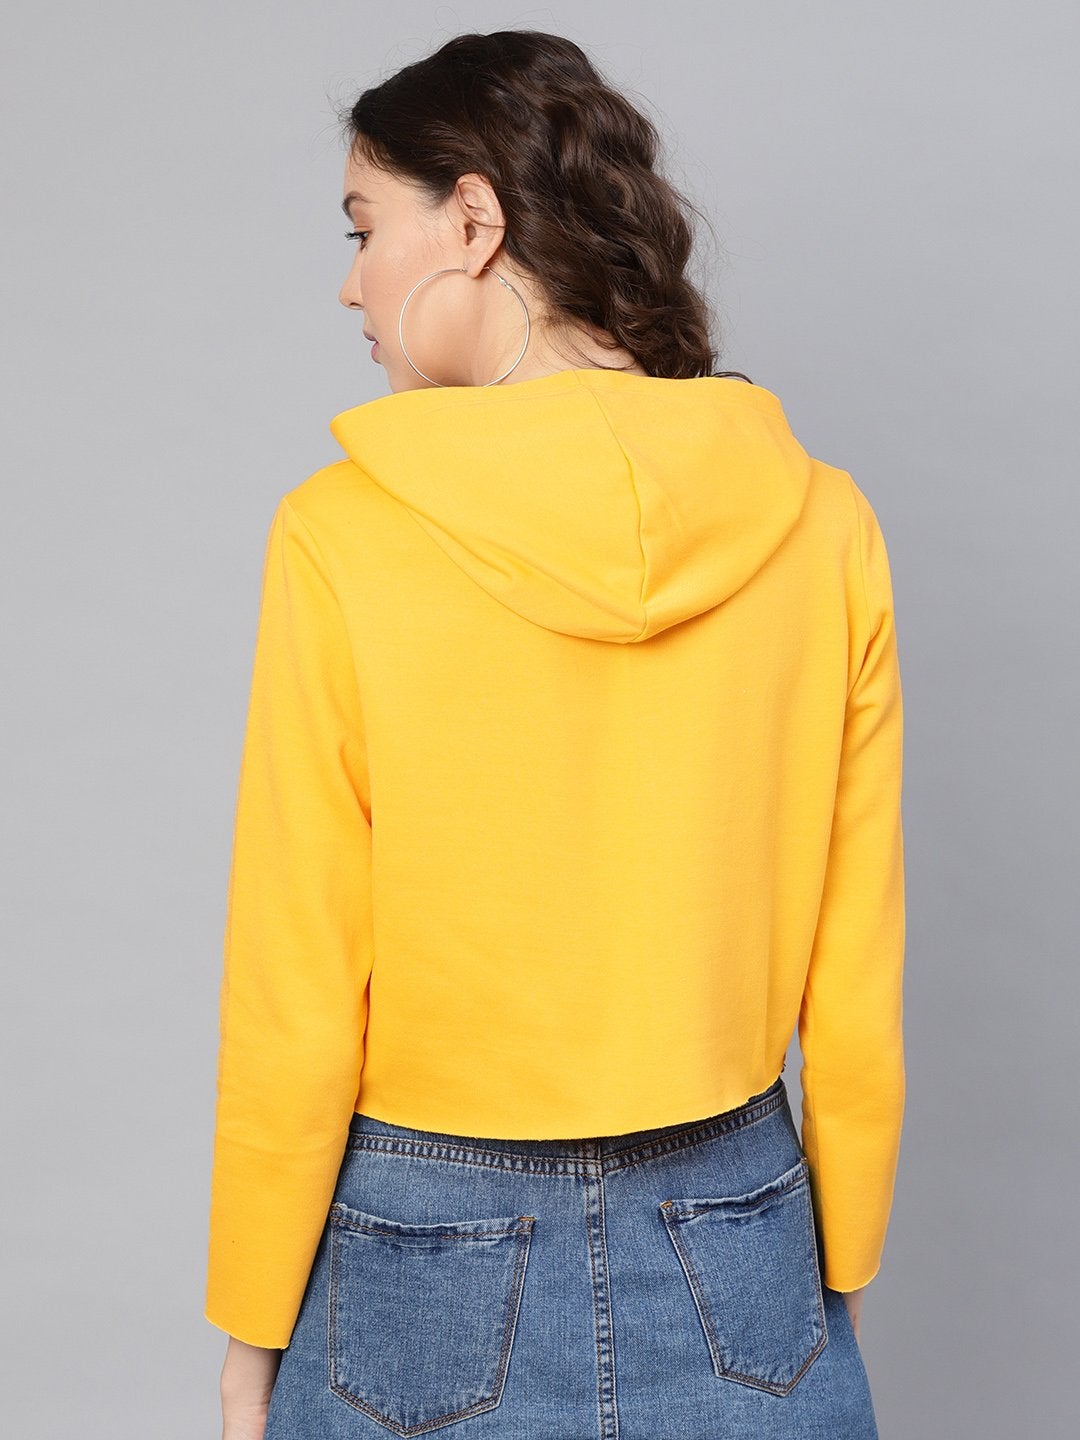 Women's Yellow Kitty Sweatshirt - SASSAFRAS